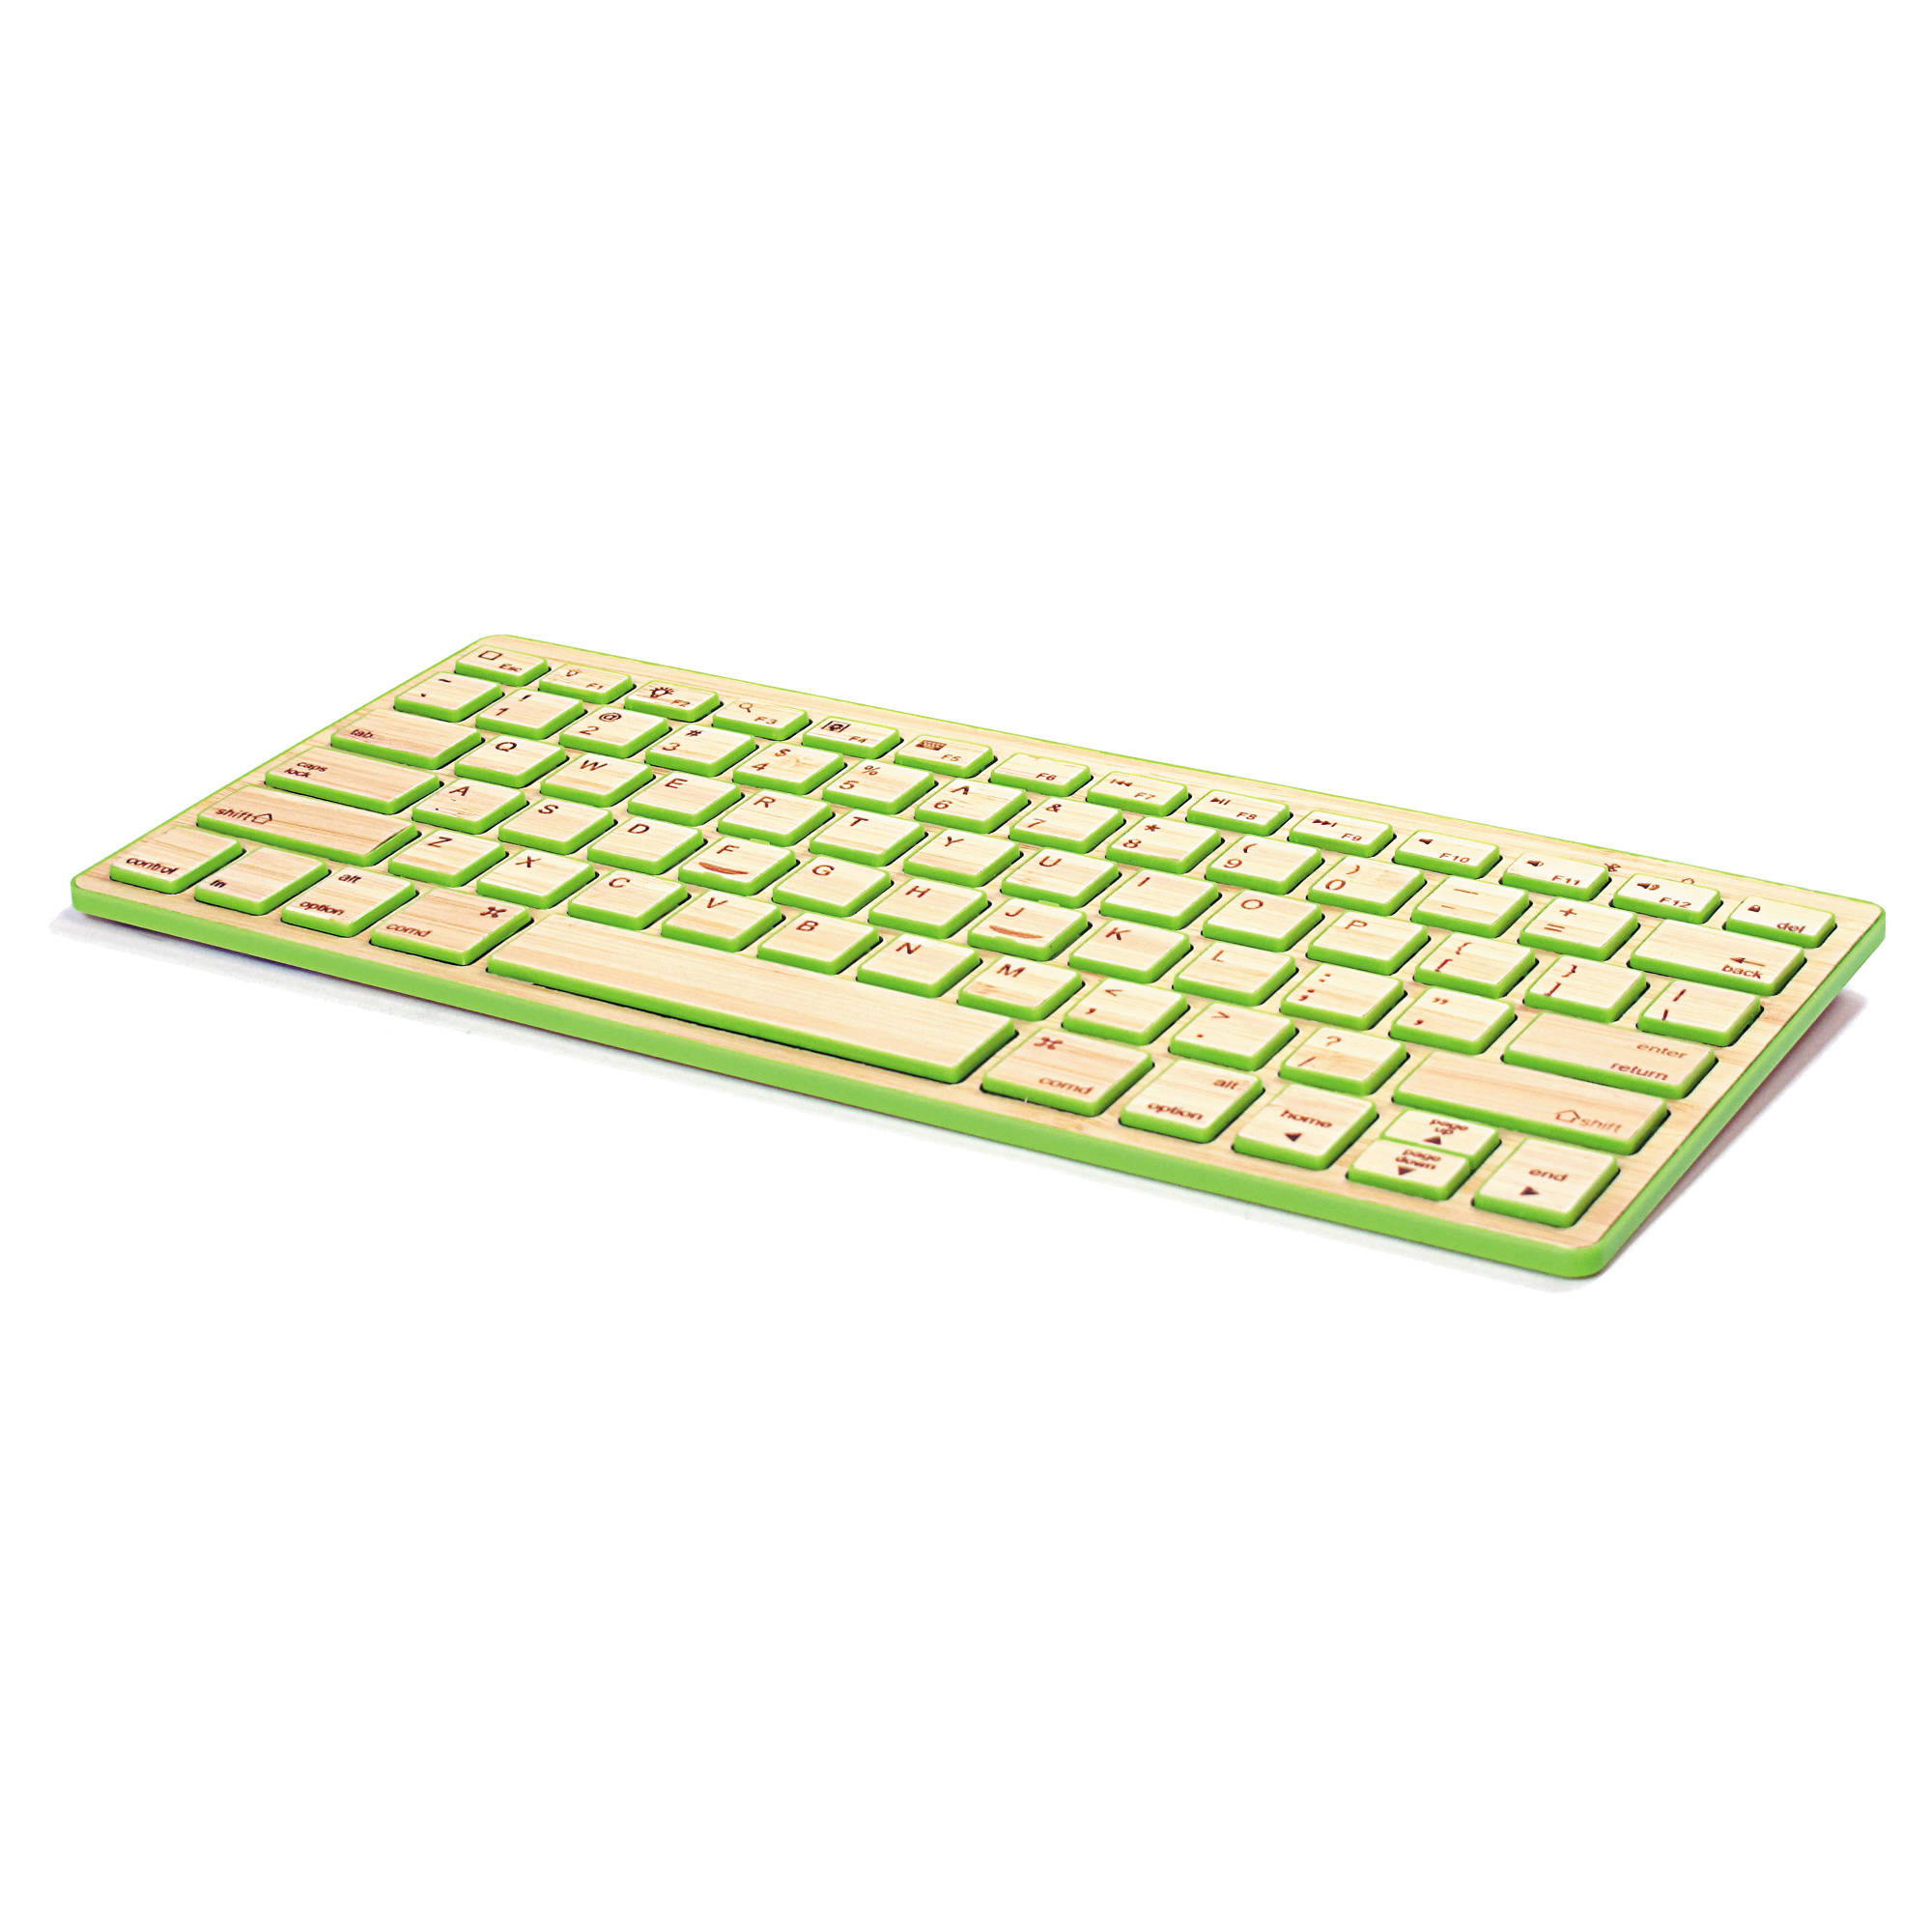 Impecca Bamboo Bluetooth Compact Wireless Keyboard Kbb78btg B H